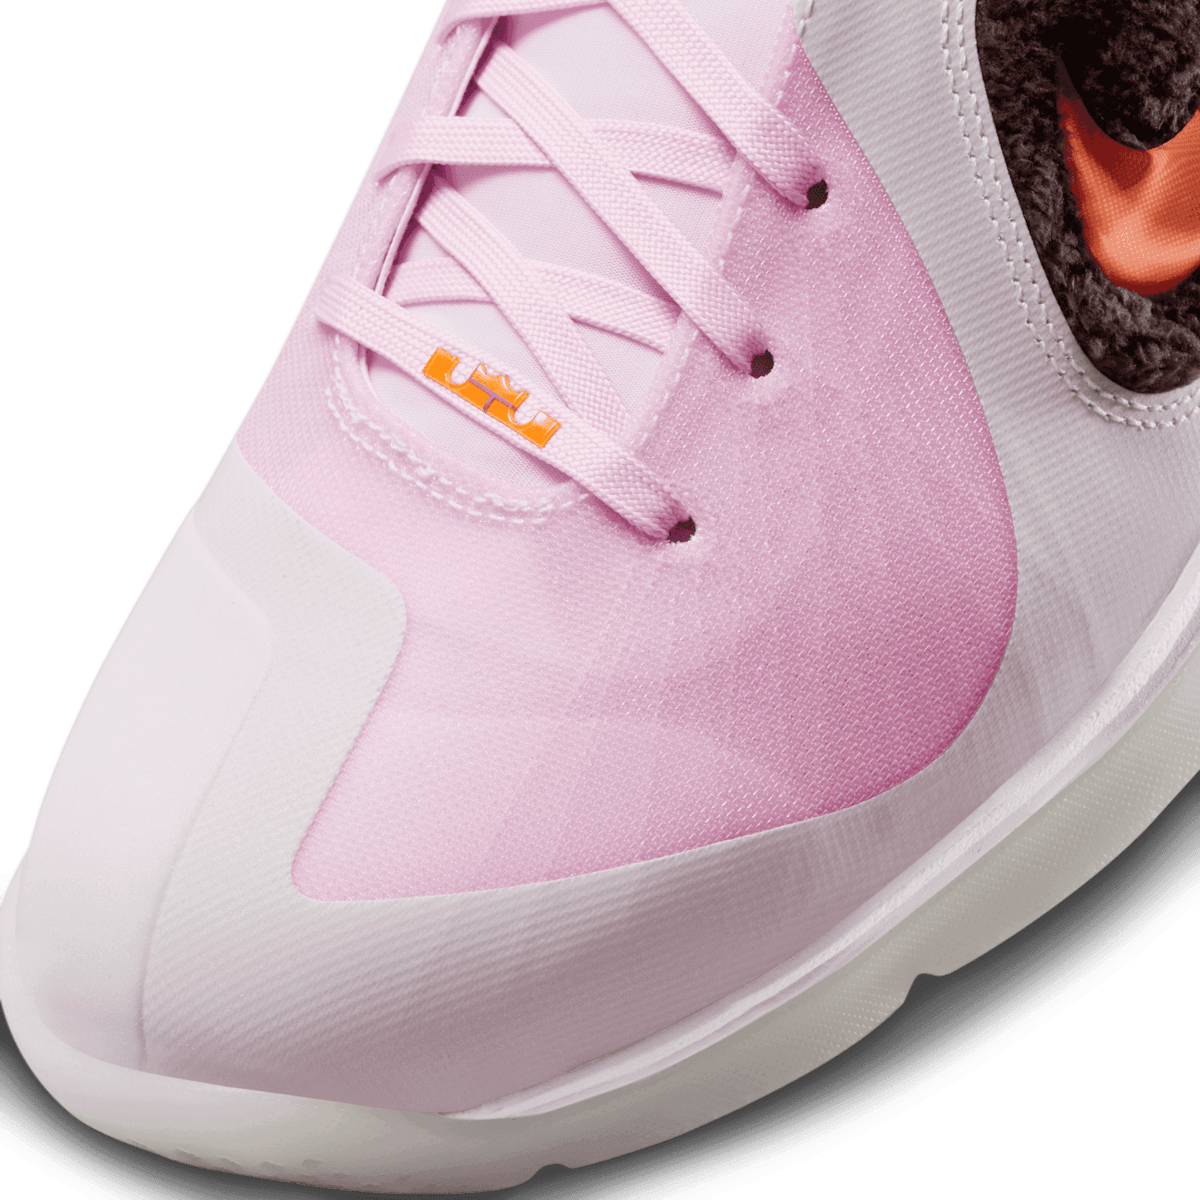 Nike LeBron 9 Regal Pink - DJ3908-600 Raffles and Release Date